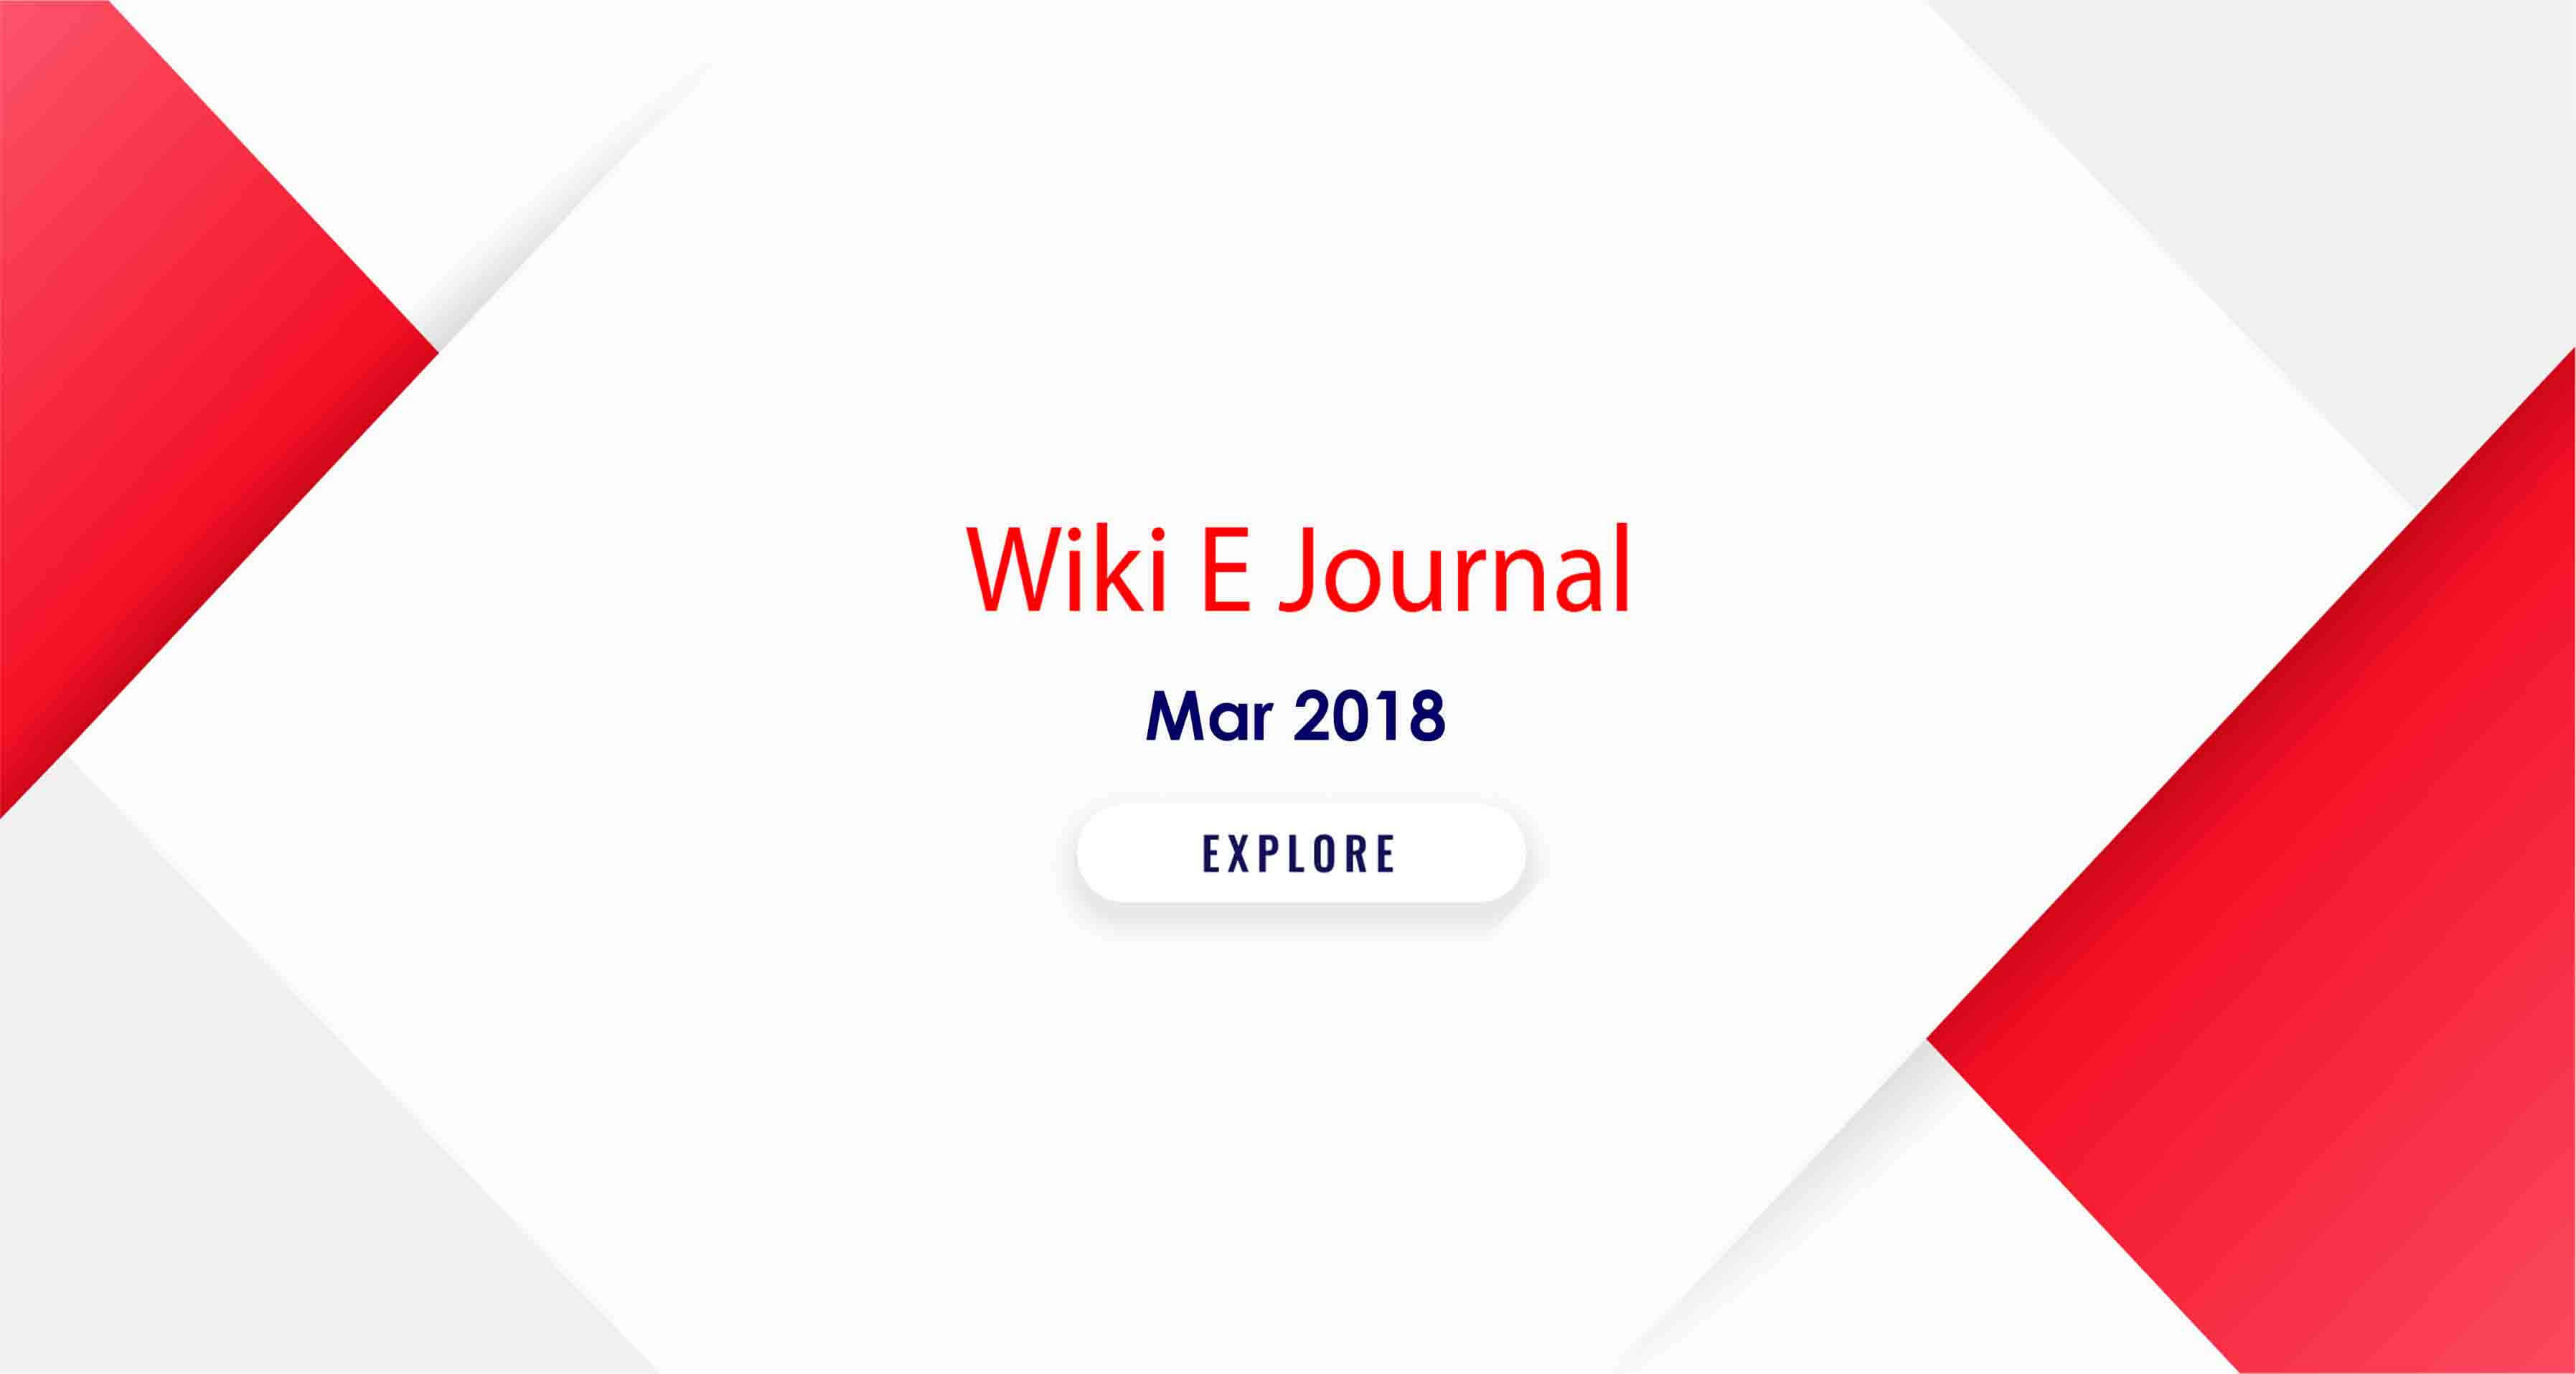 SBS WIKI E Journal MAR 2018